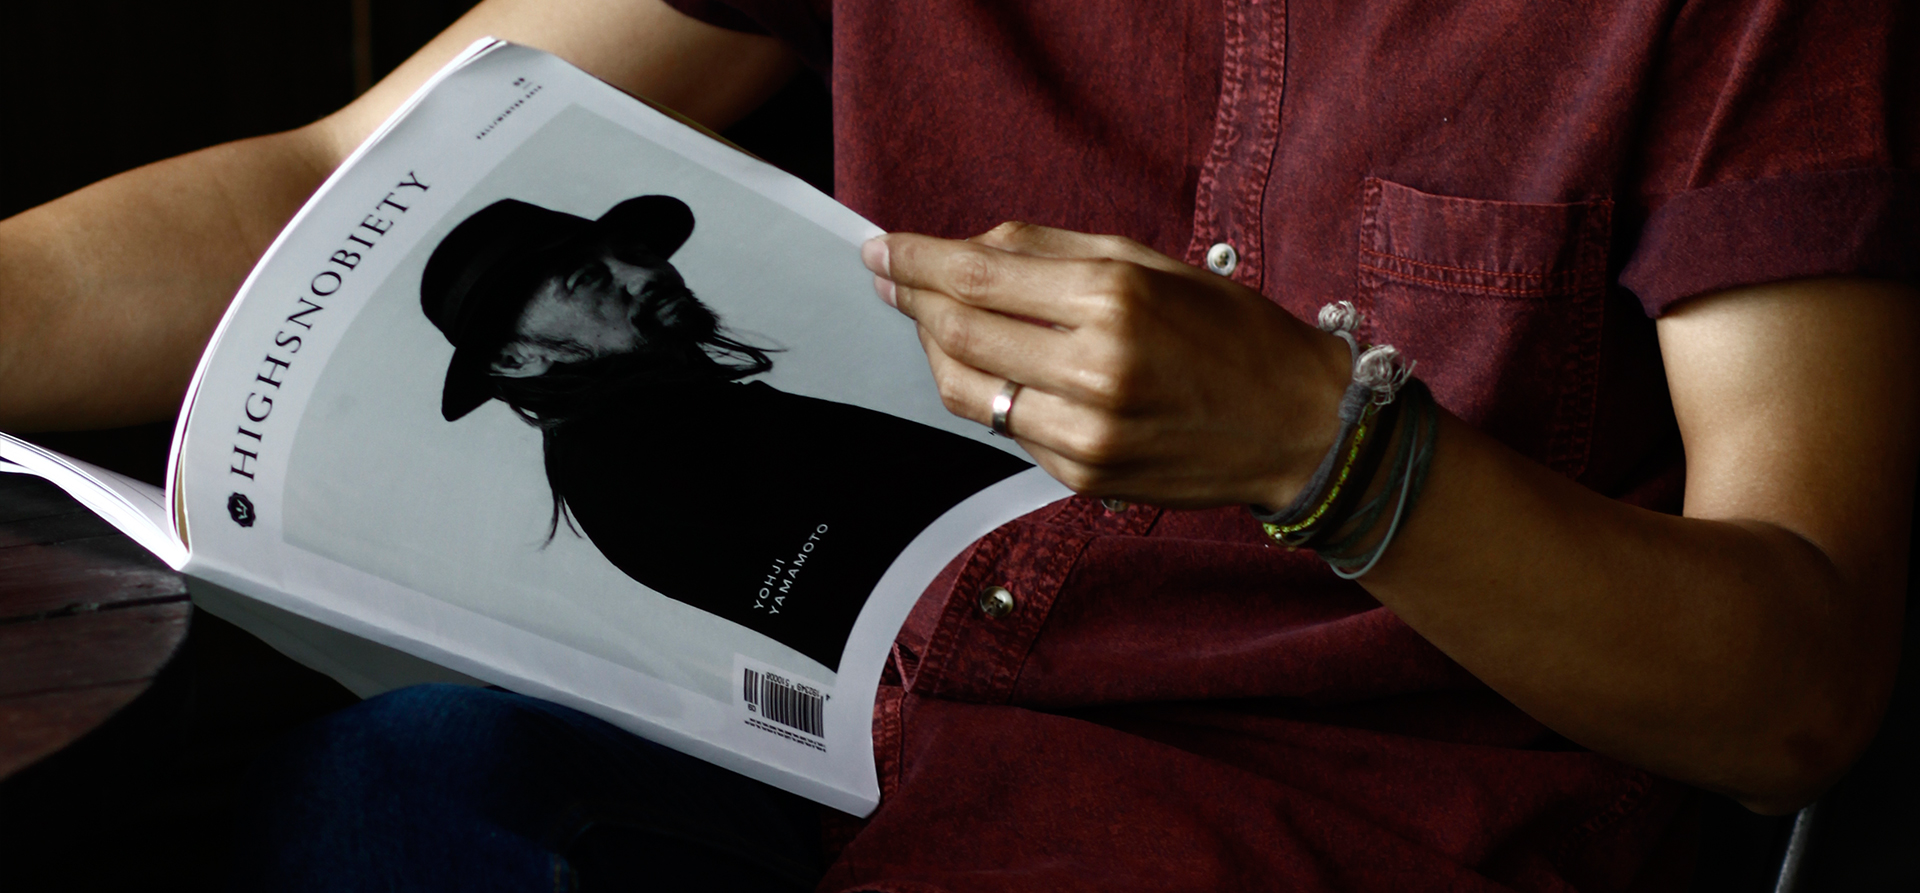 casestudy-04.jpg Woman reading a magazine